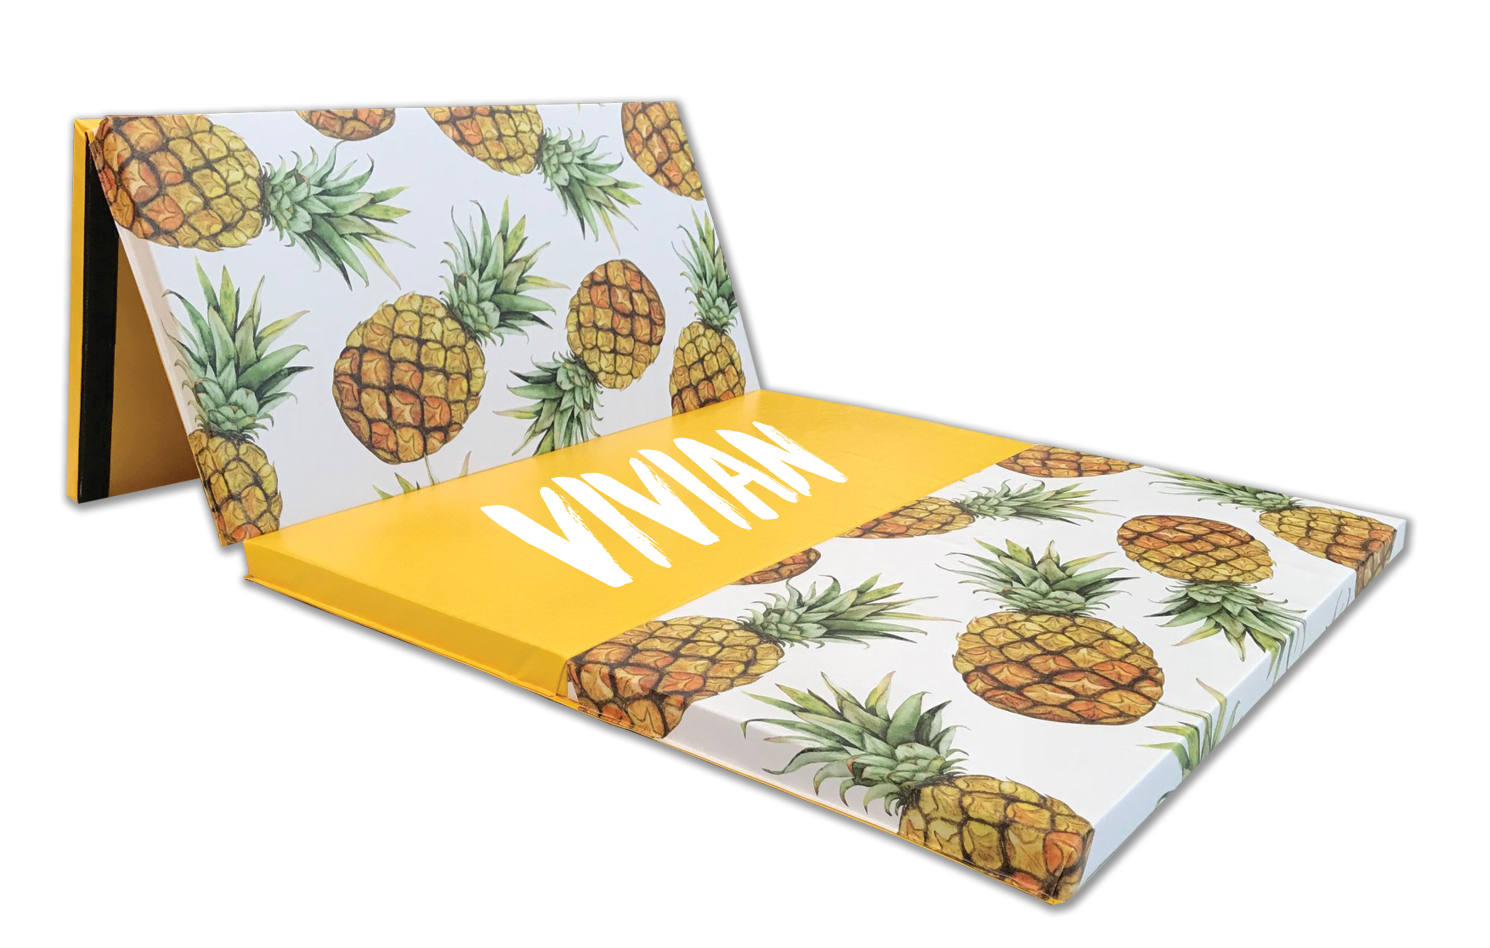 QUICKSHIP Pineapple 4' x 8' Folding Gymnastics Mat